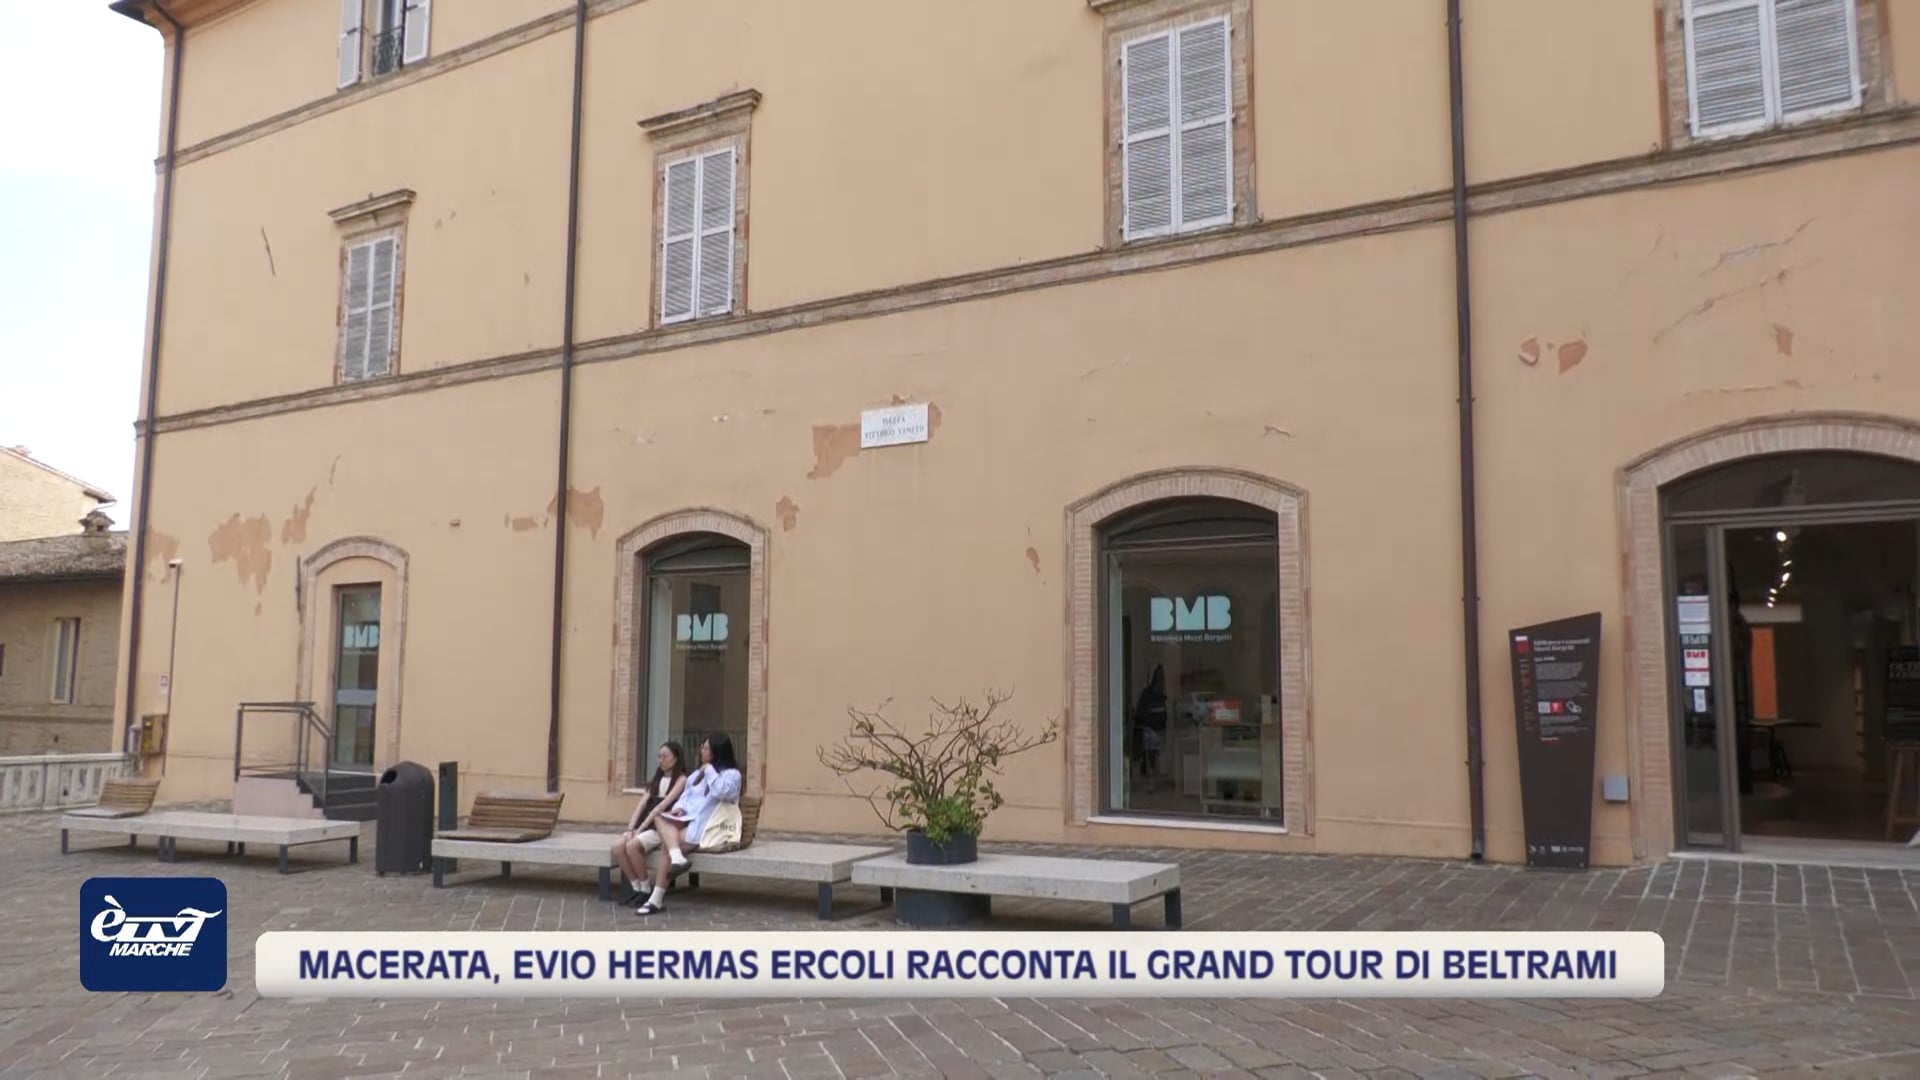 Macerata, Evio Hermas Ercoli racconta il Grand Tour di Beltrami - VIDEO